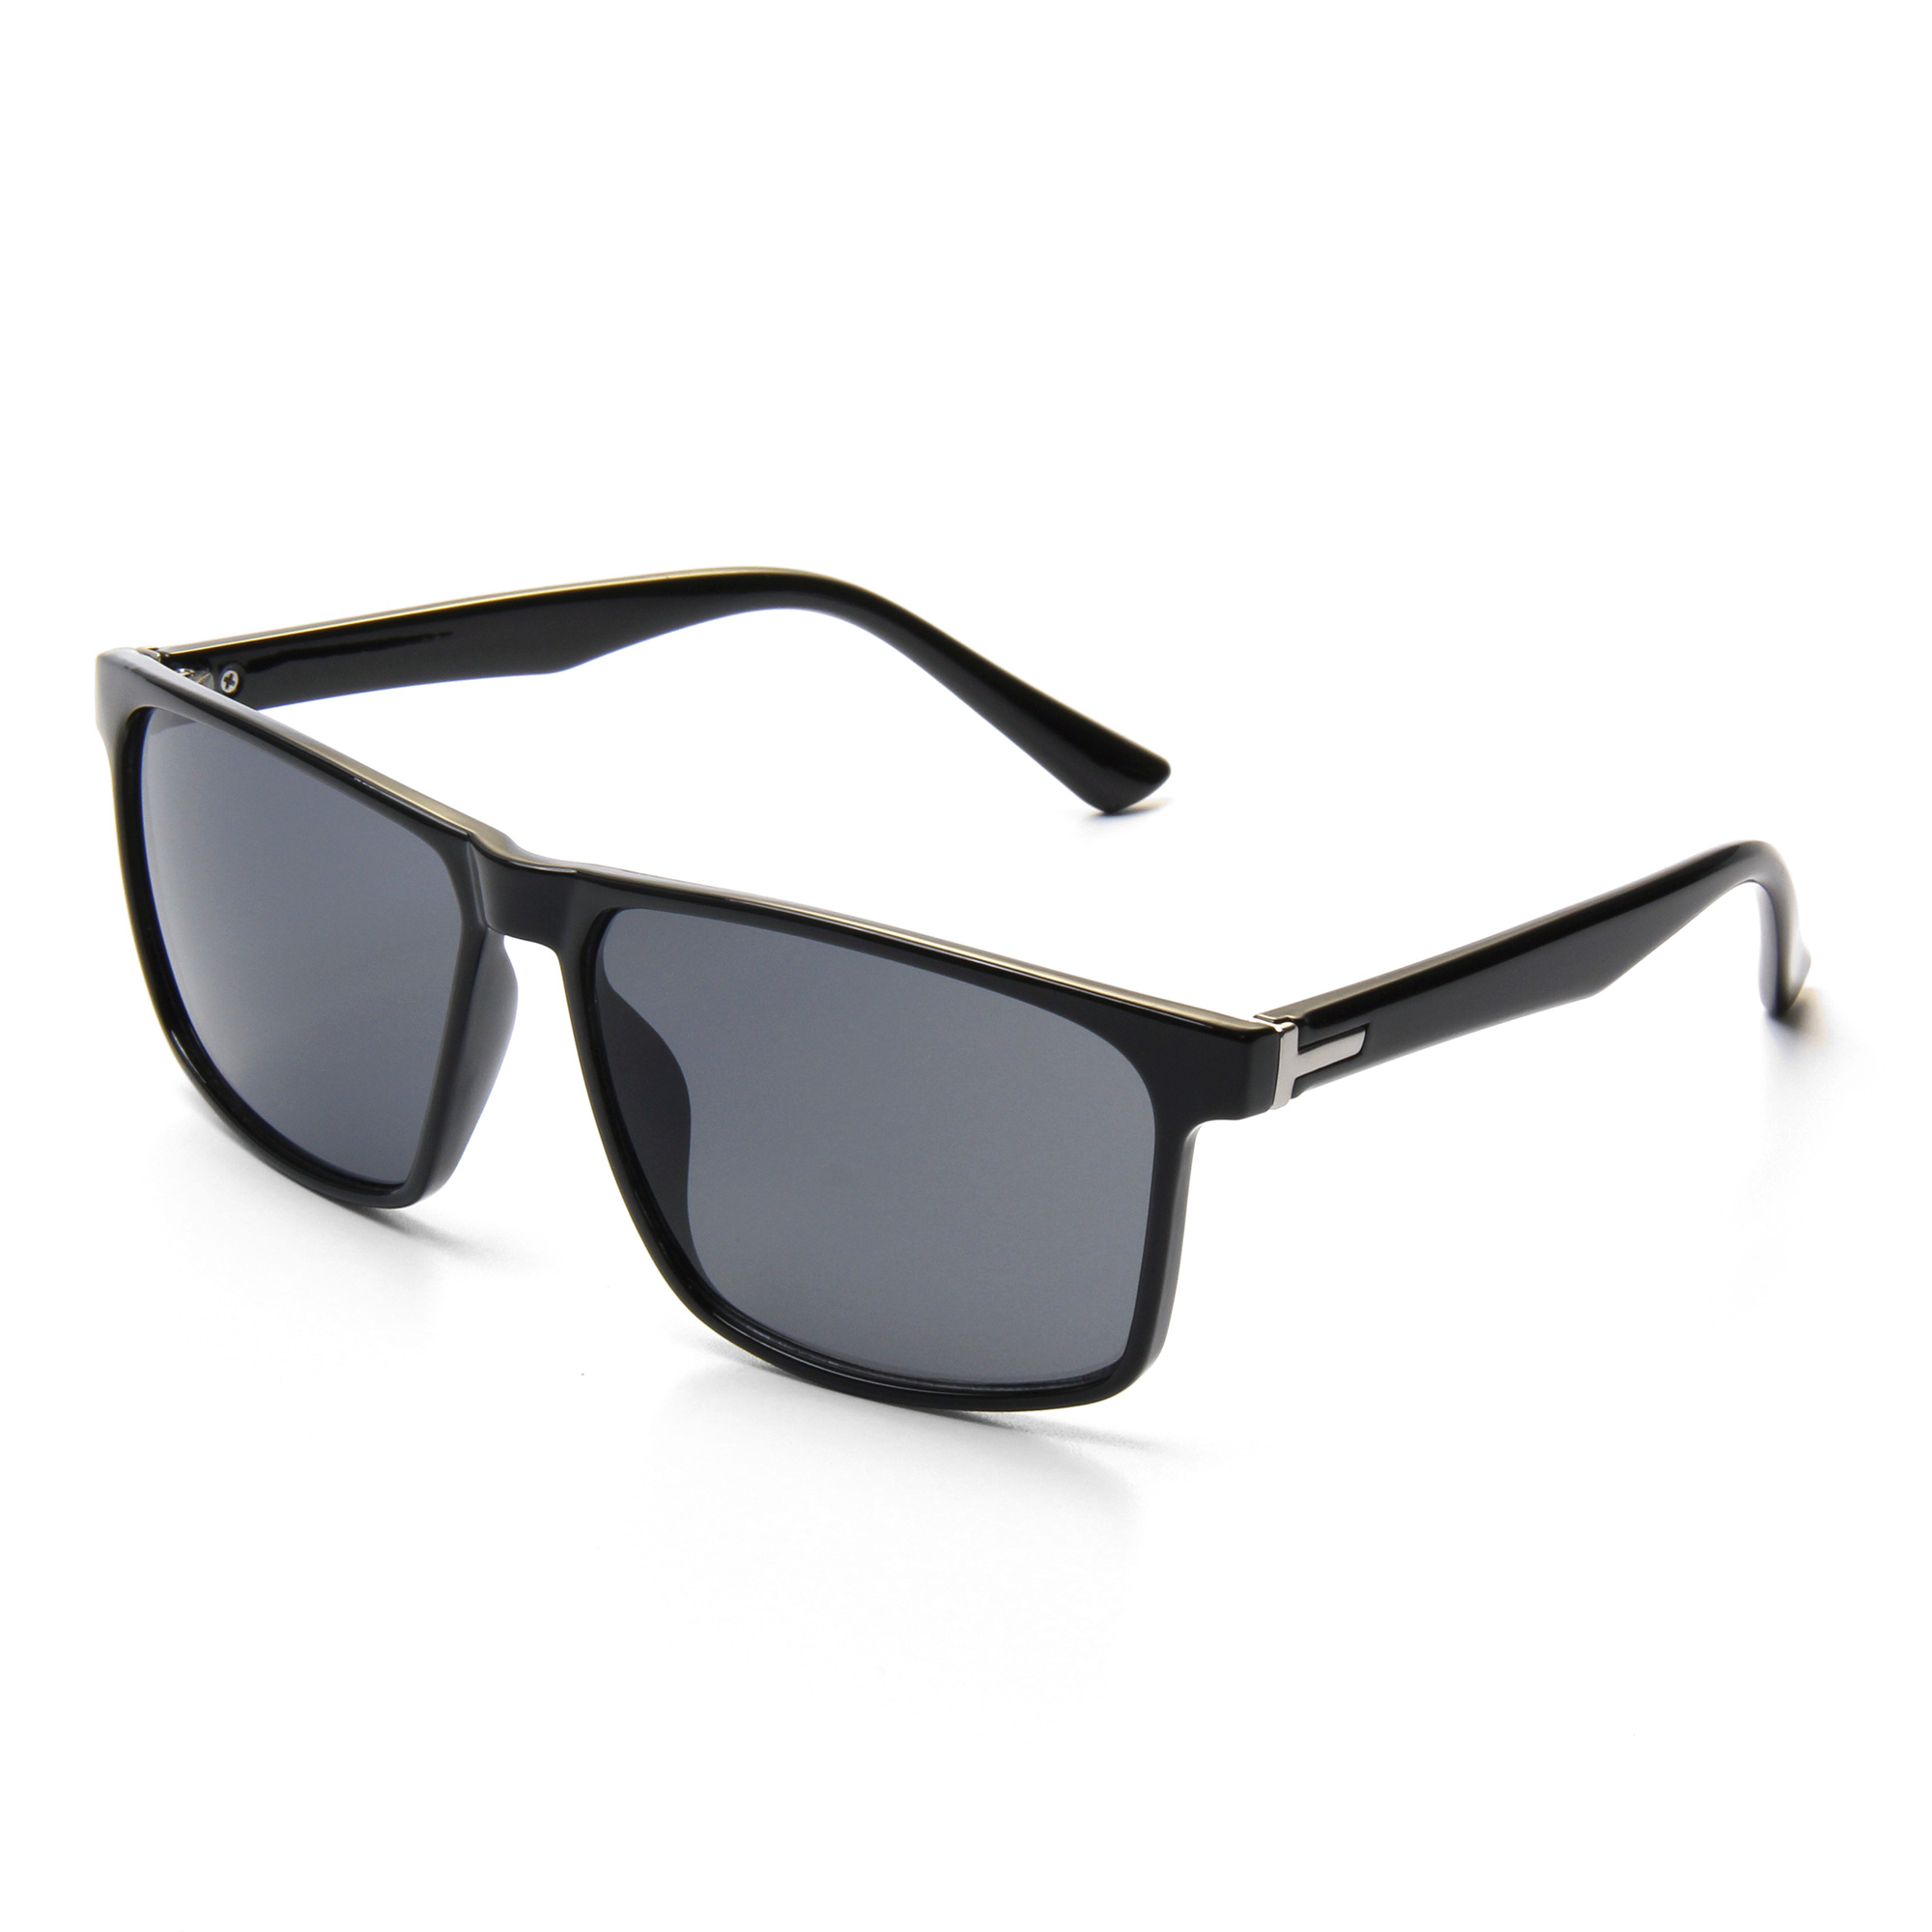 Eugenia men sunglasses top brand for Travel-2